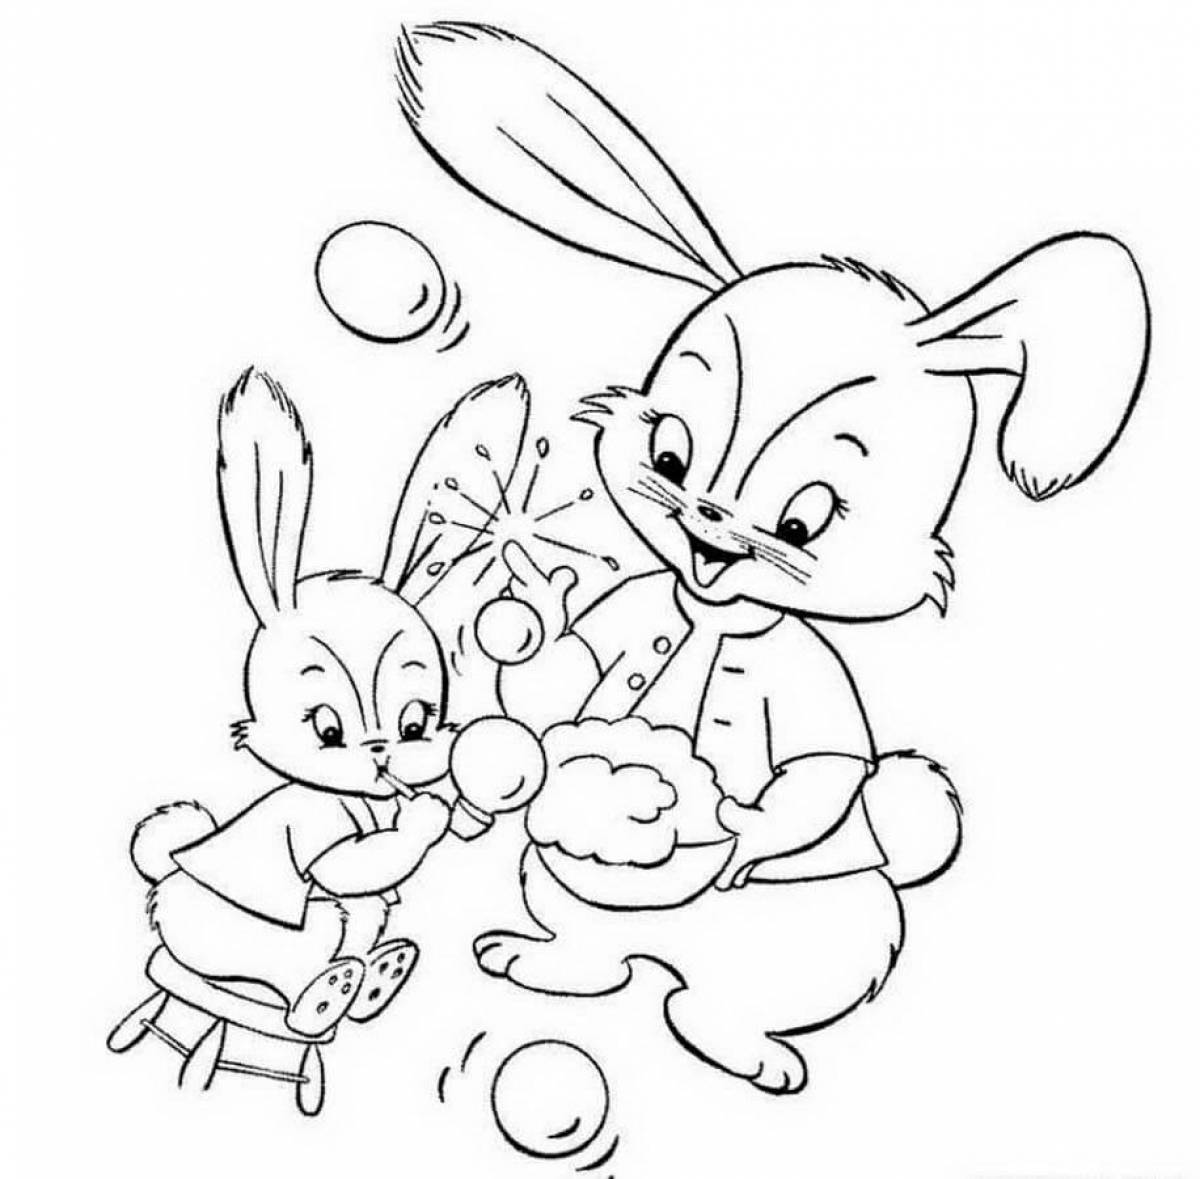 Rampant Christmas Bunny coloring book